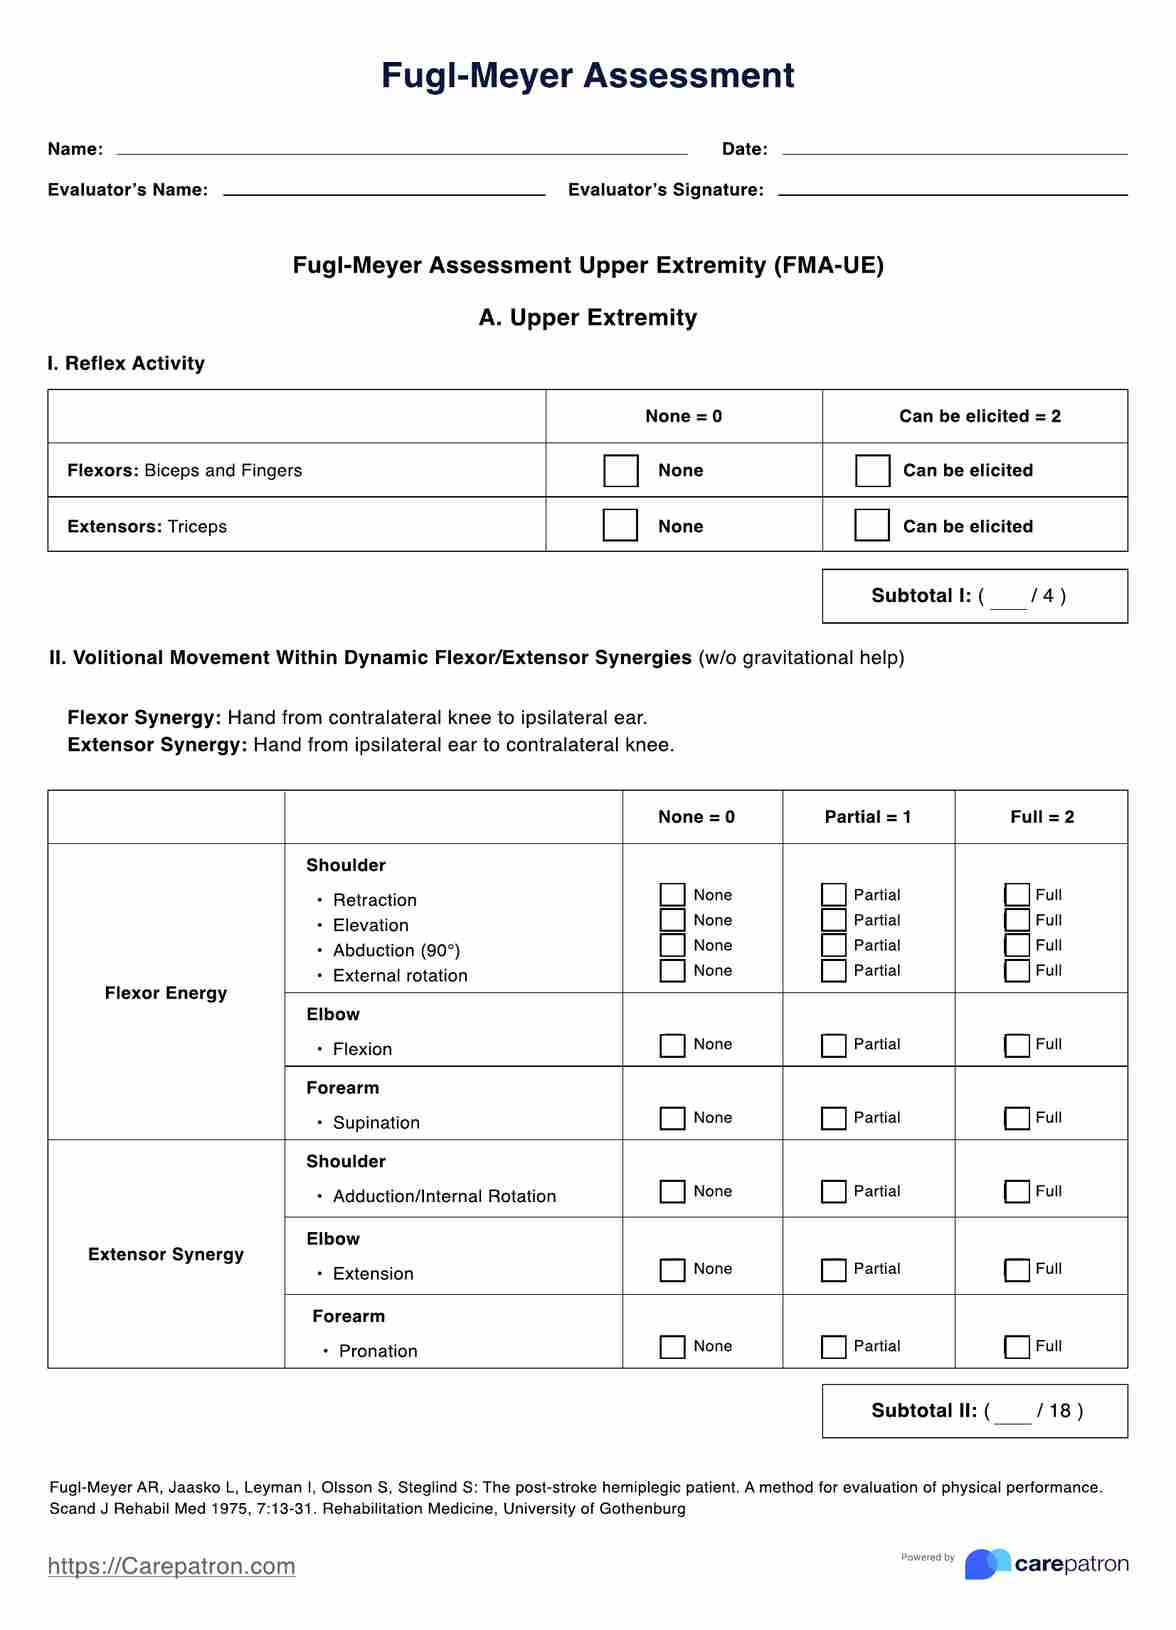 Fugl Meyer Assessment PDF Example